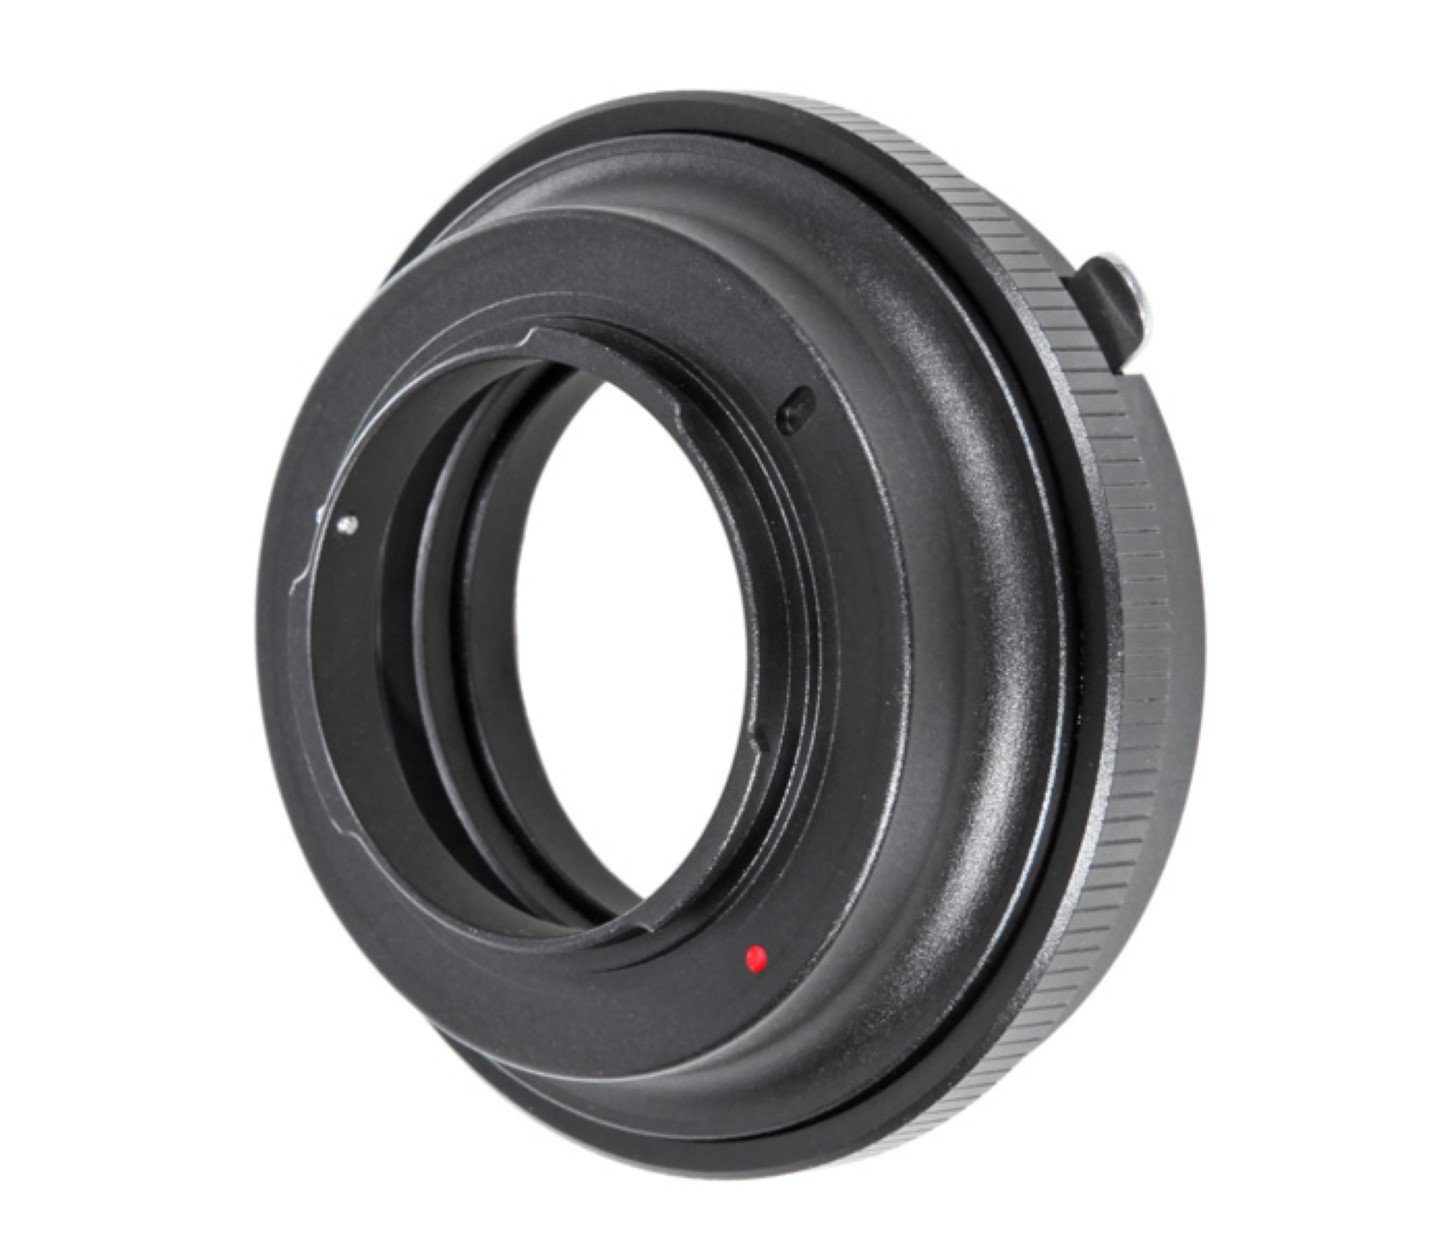 ayex Objektivadapter und Sony Objektiveadapter für Objektive micro 4/3 Kameras A Mount